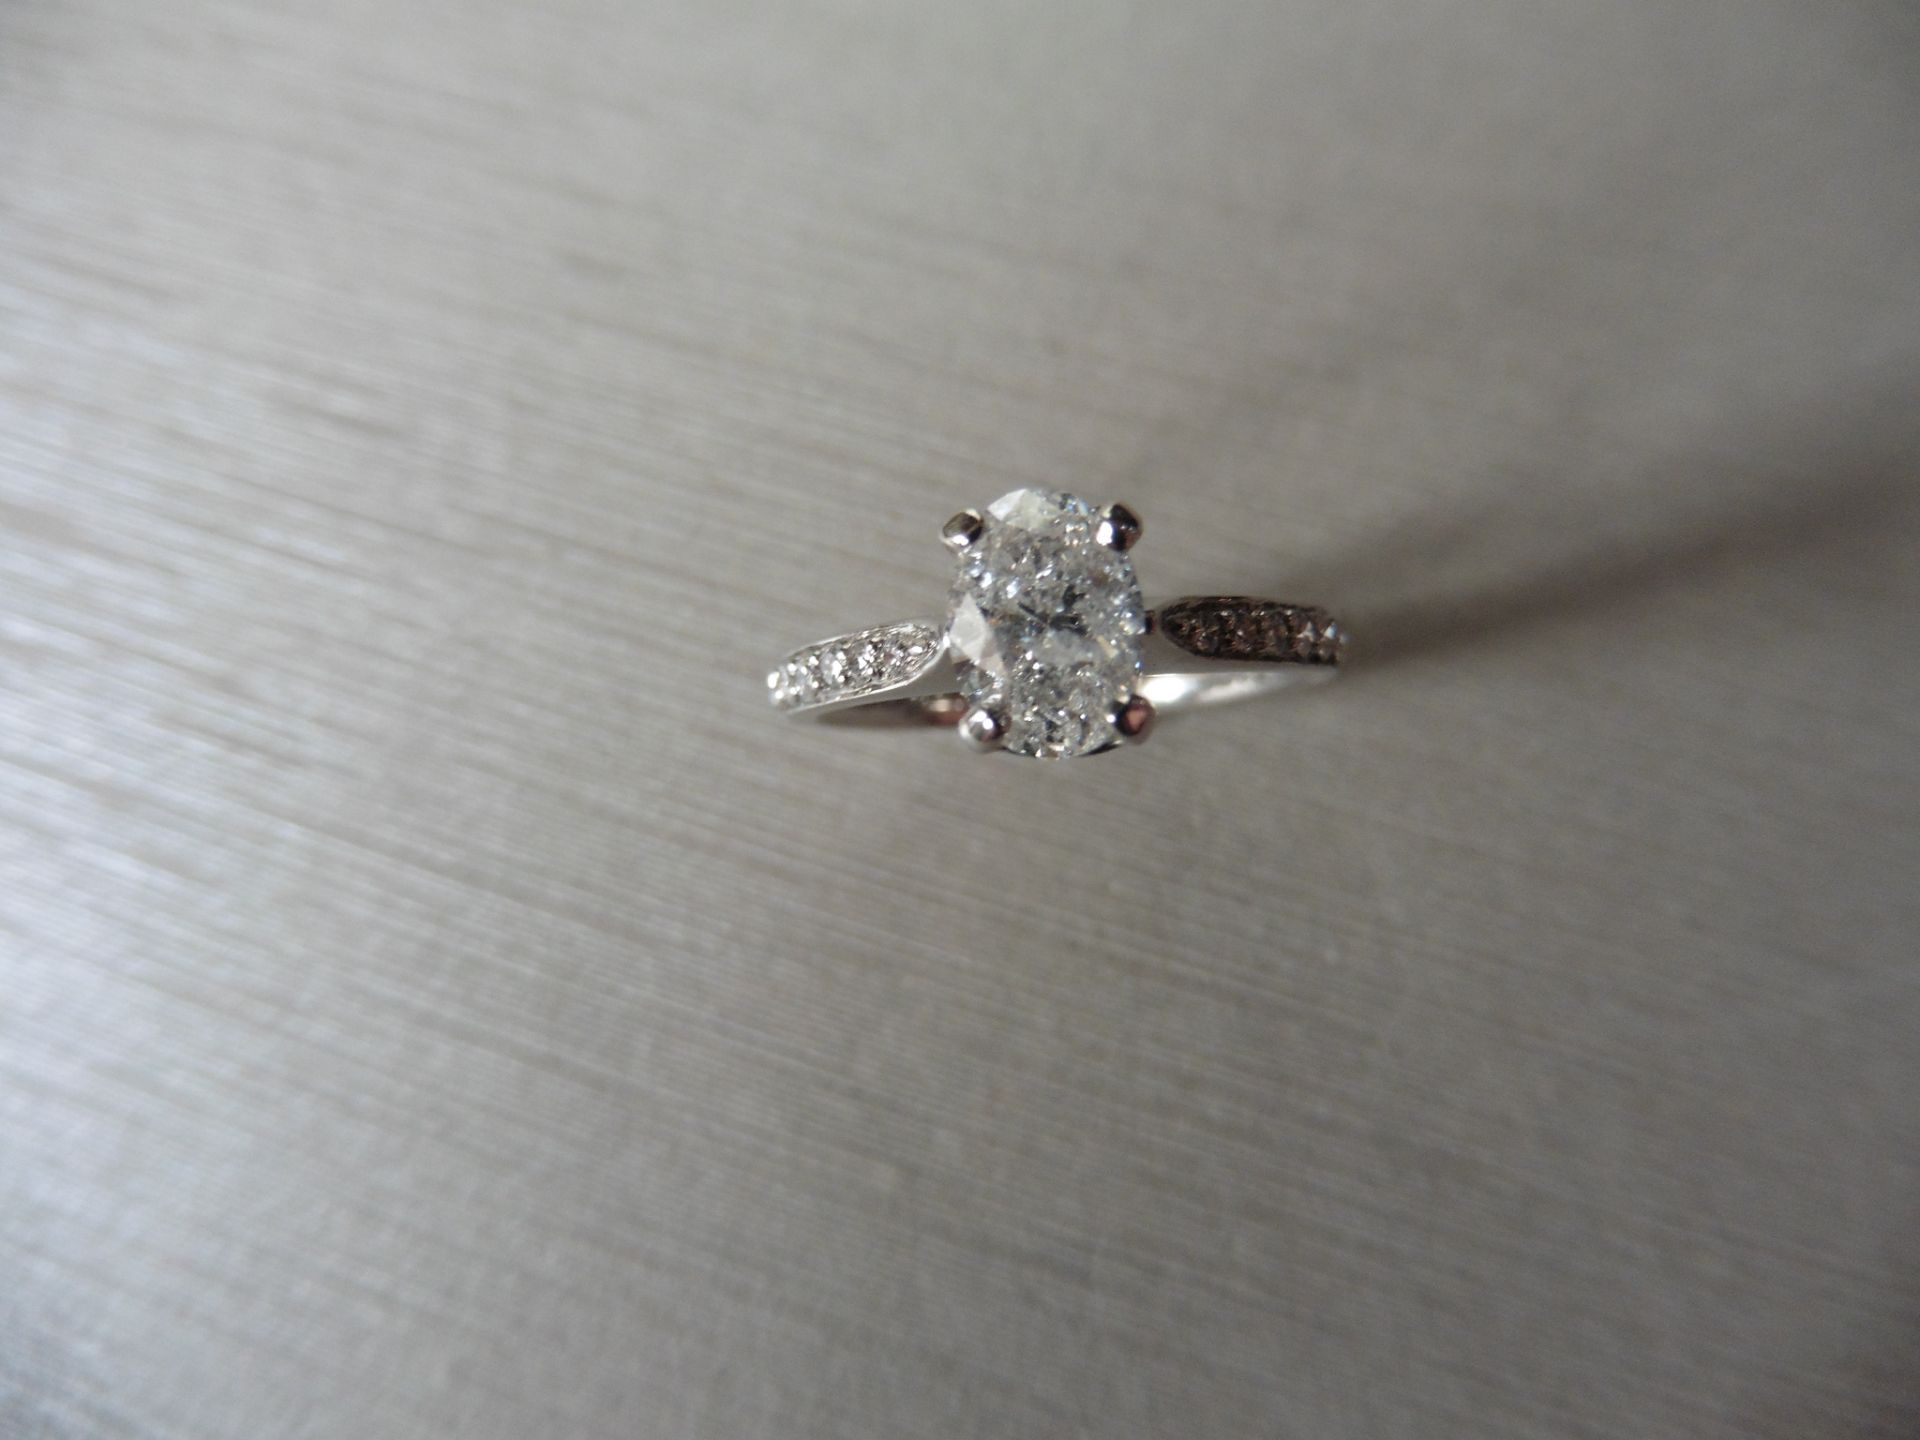 0.82ct oval diamond set solitaire ring. Centre diamond G/H colour, Si3 clarity. Shoulders micro